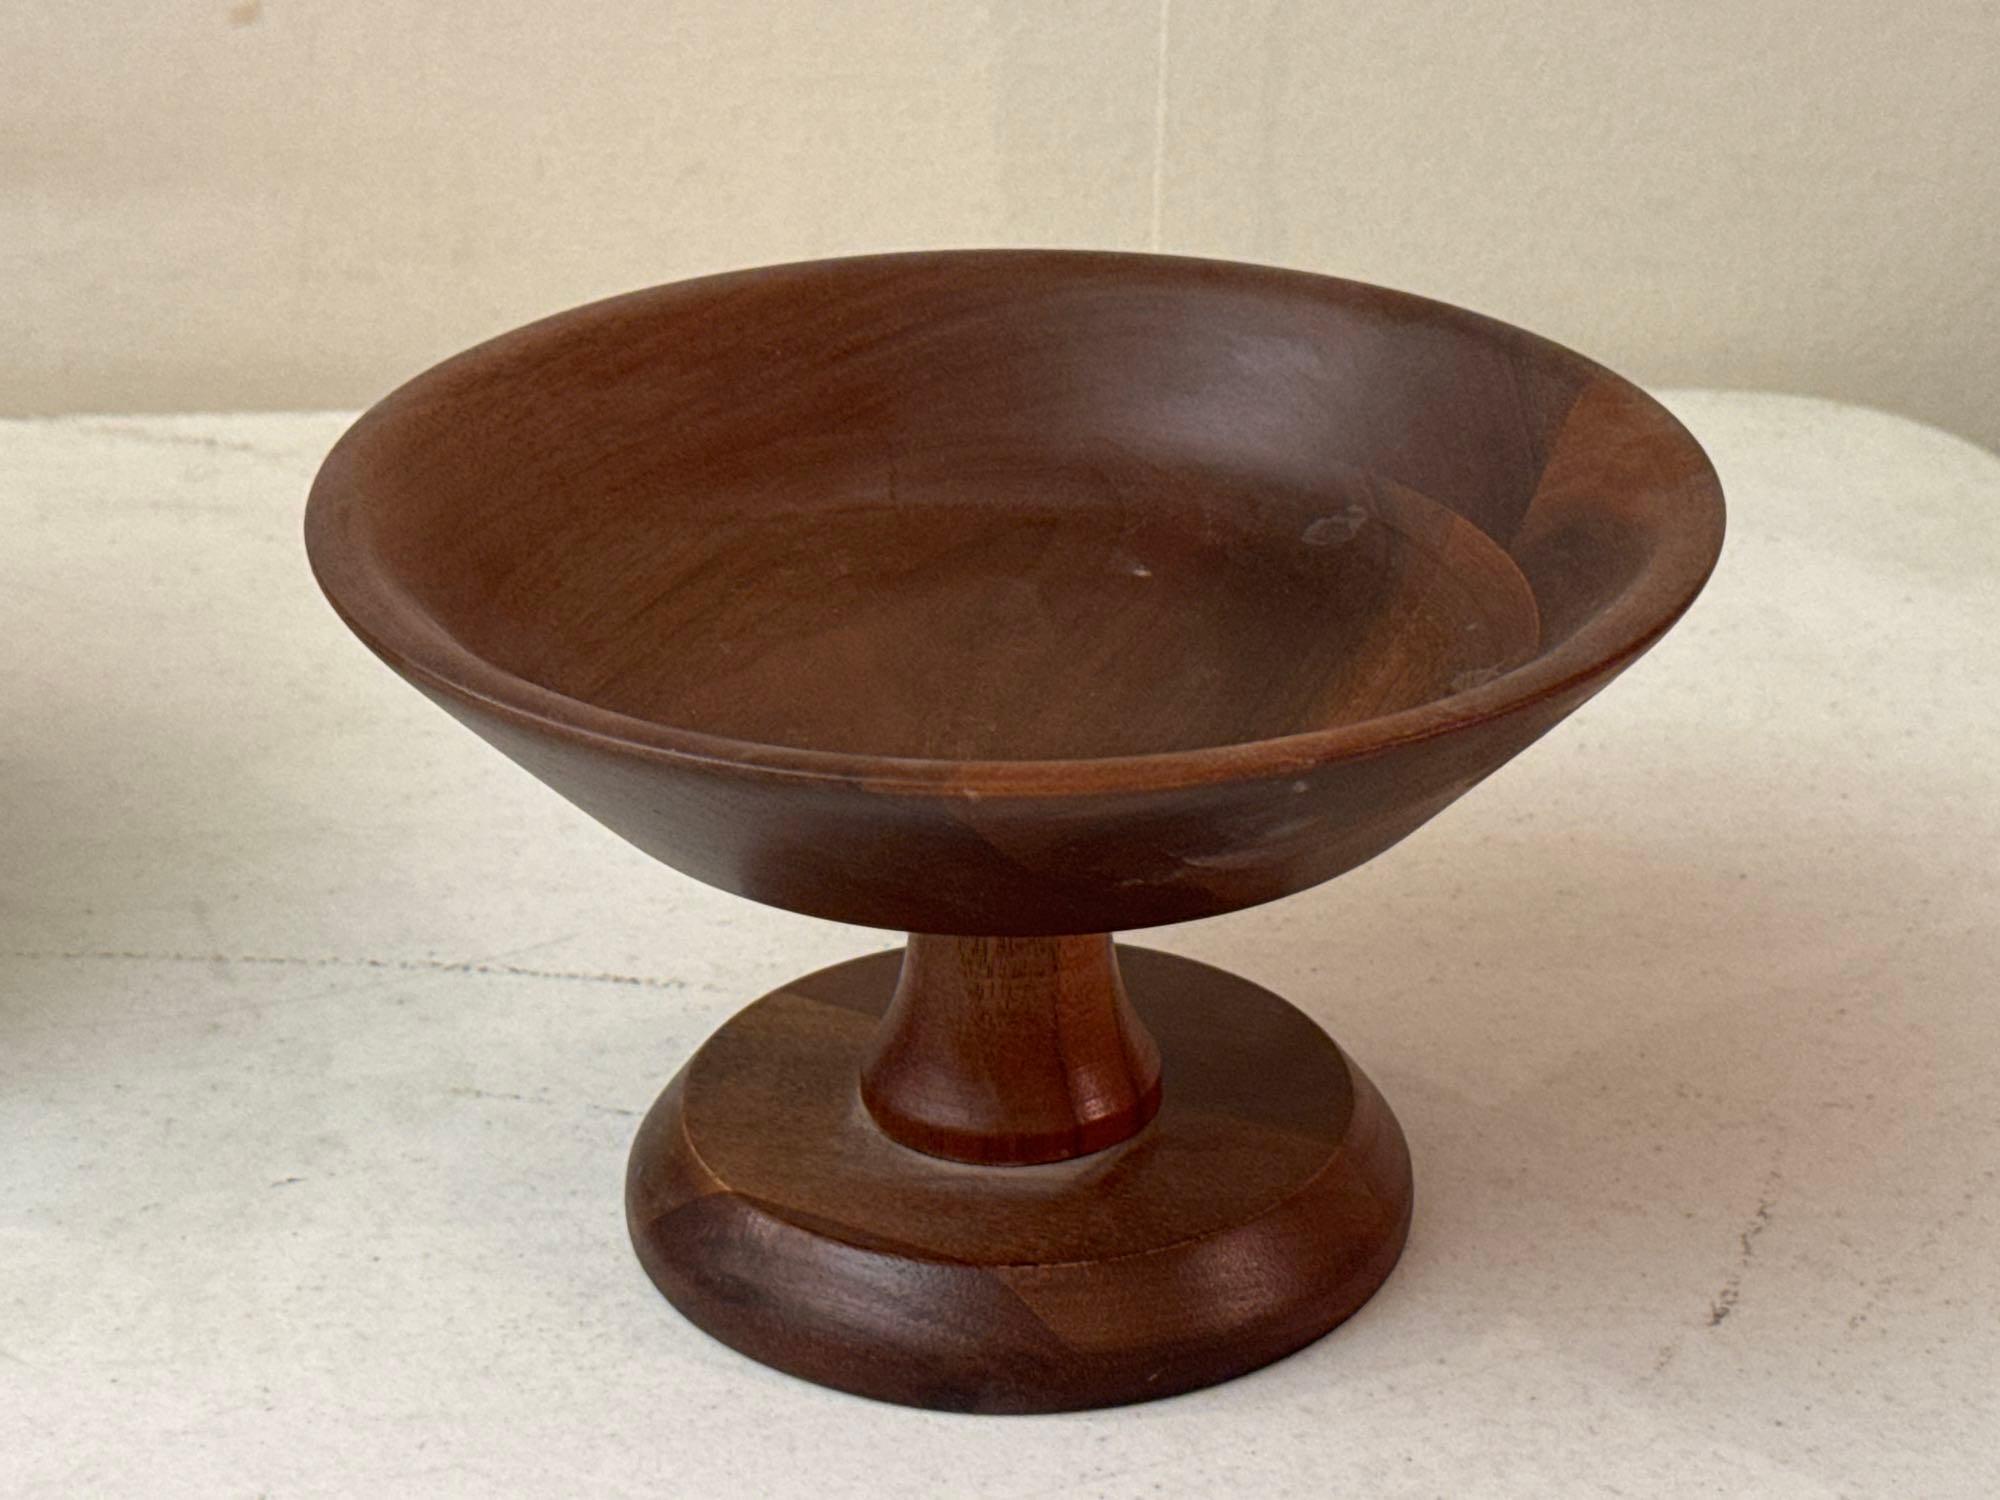 Craftsman Organizer Bin, Sewing Basket, Spool Holder & Walnut Wood Pedestal Bowl